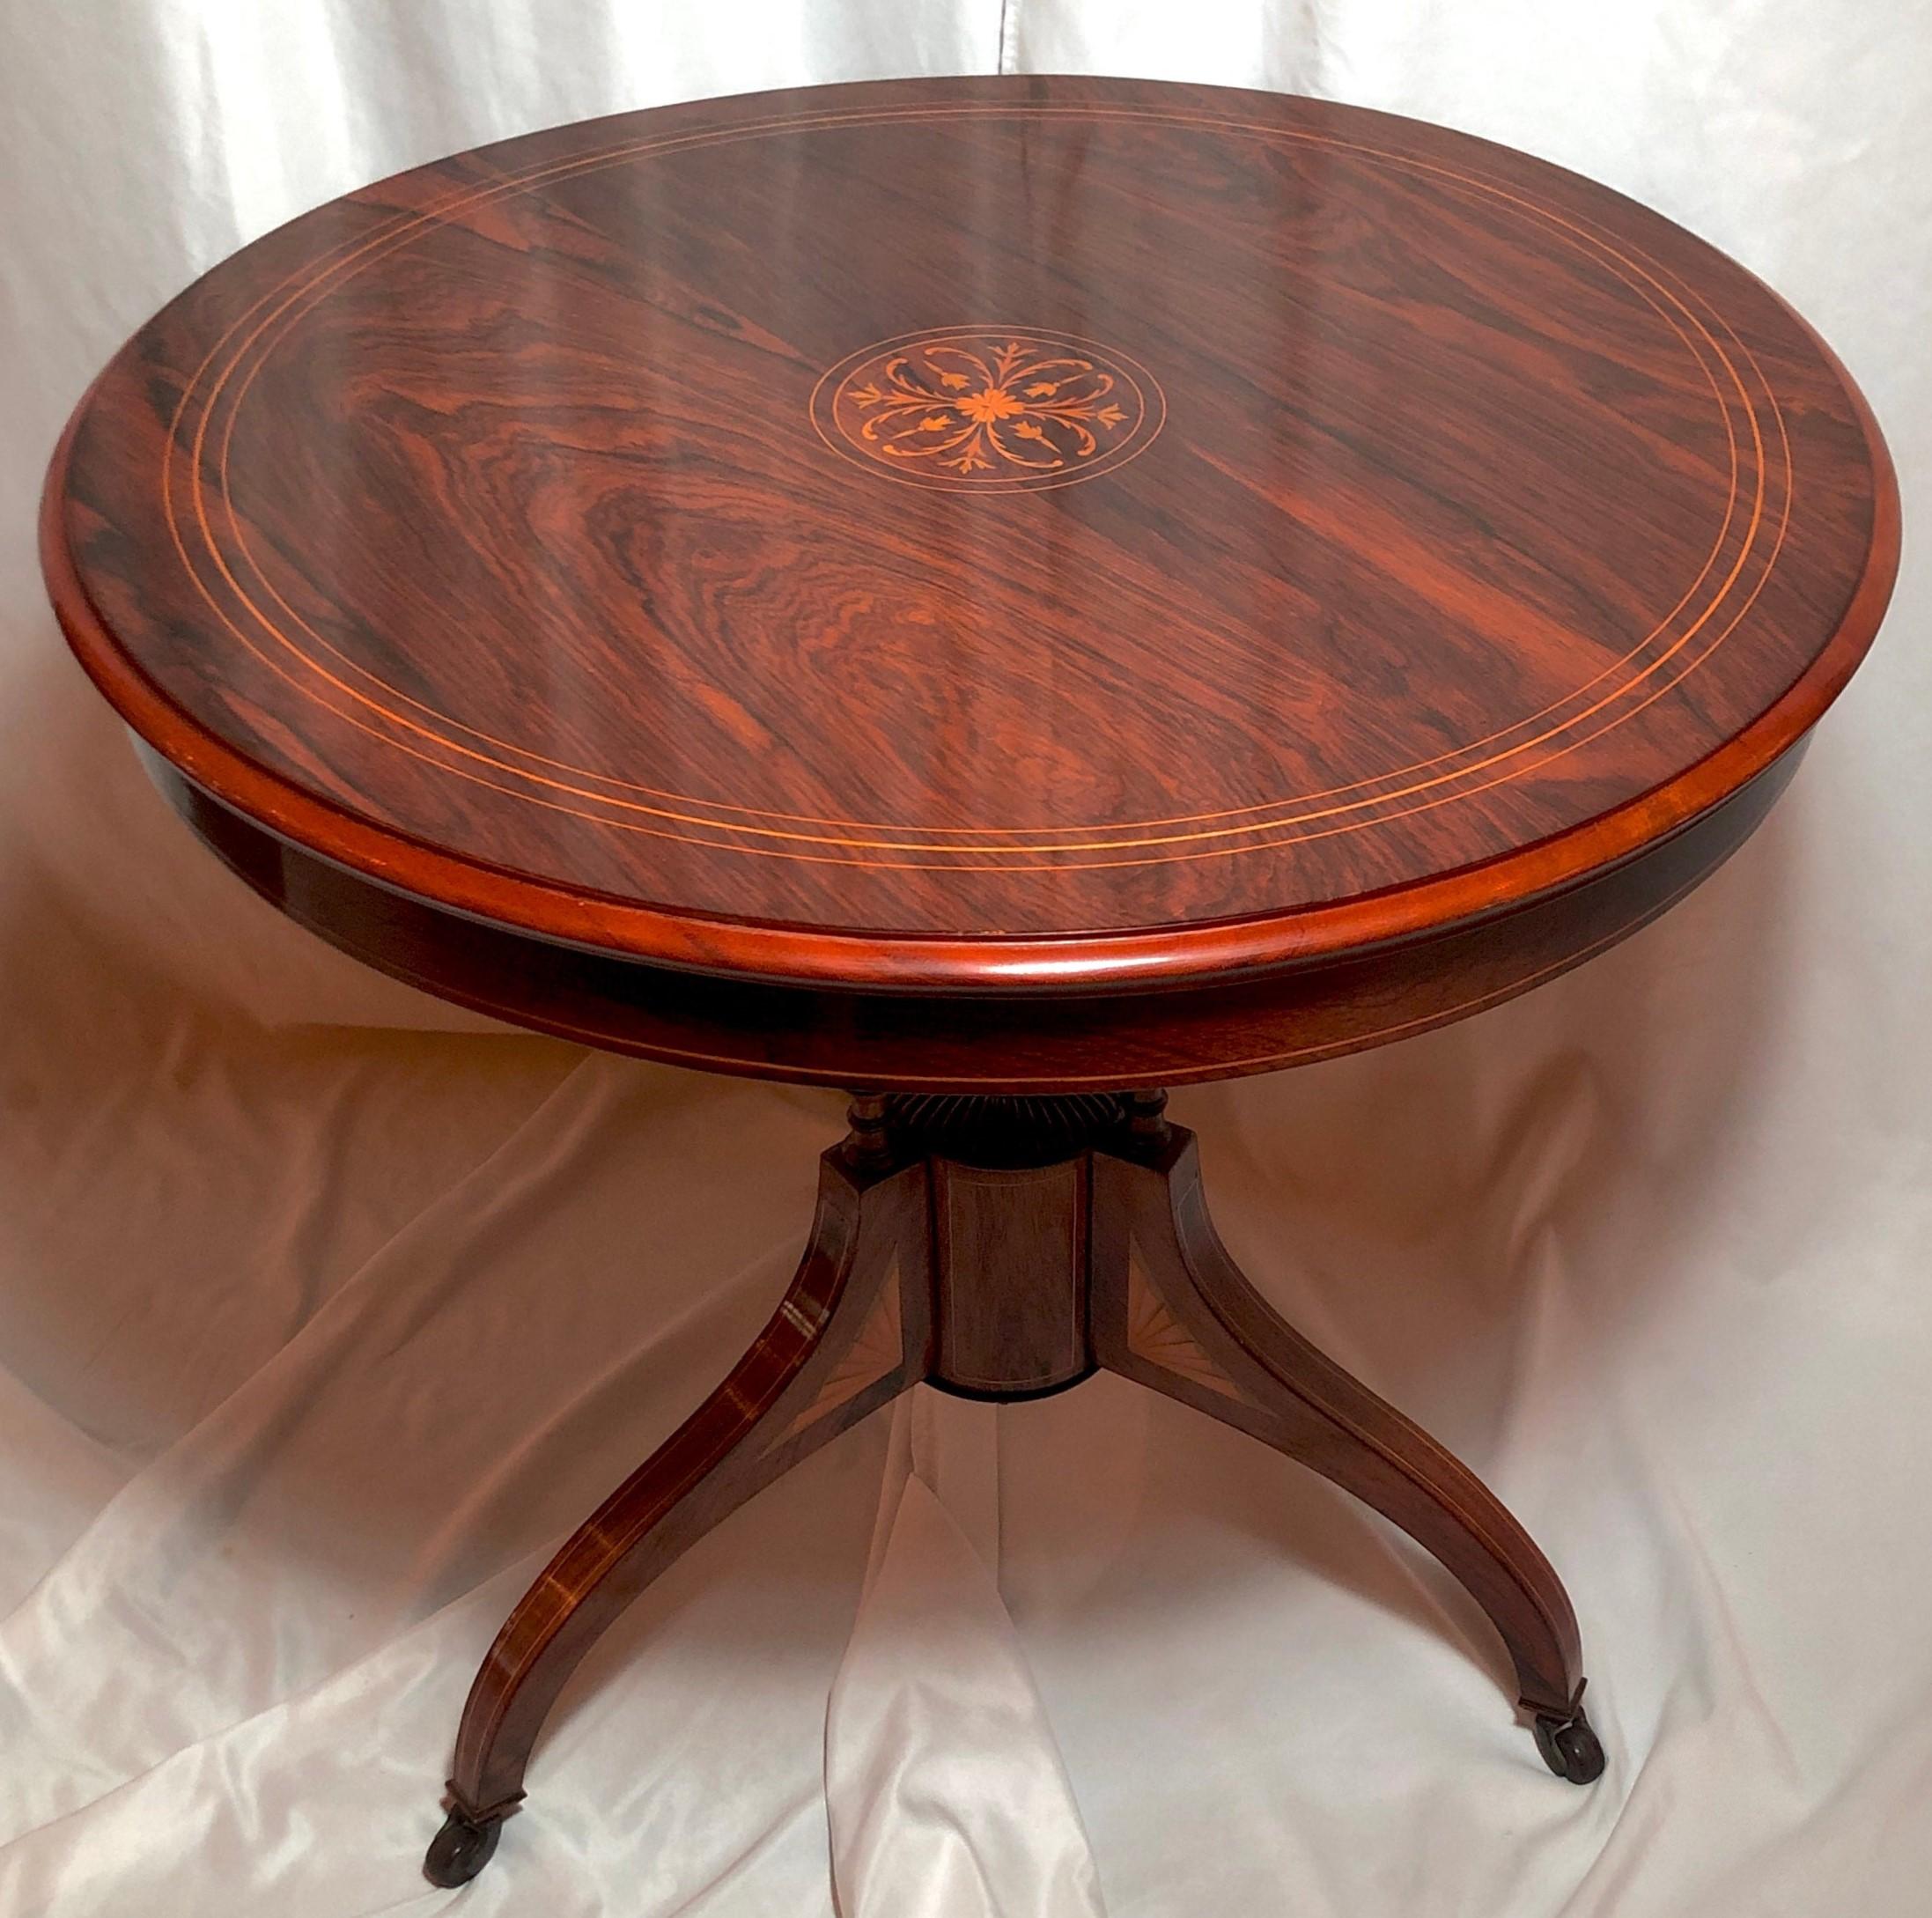 Ancienne table anglaise victorienne en palissandre avec incrustation, Circa 1860- 1870.